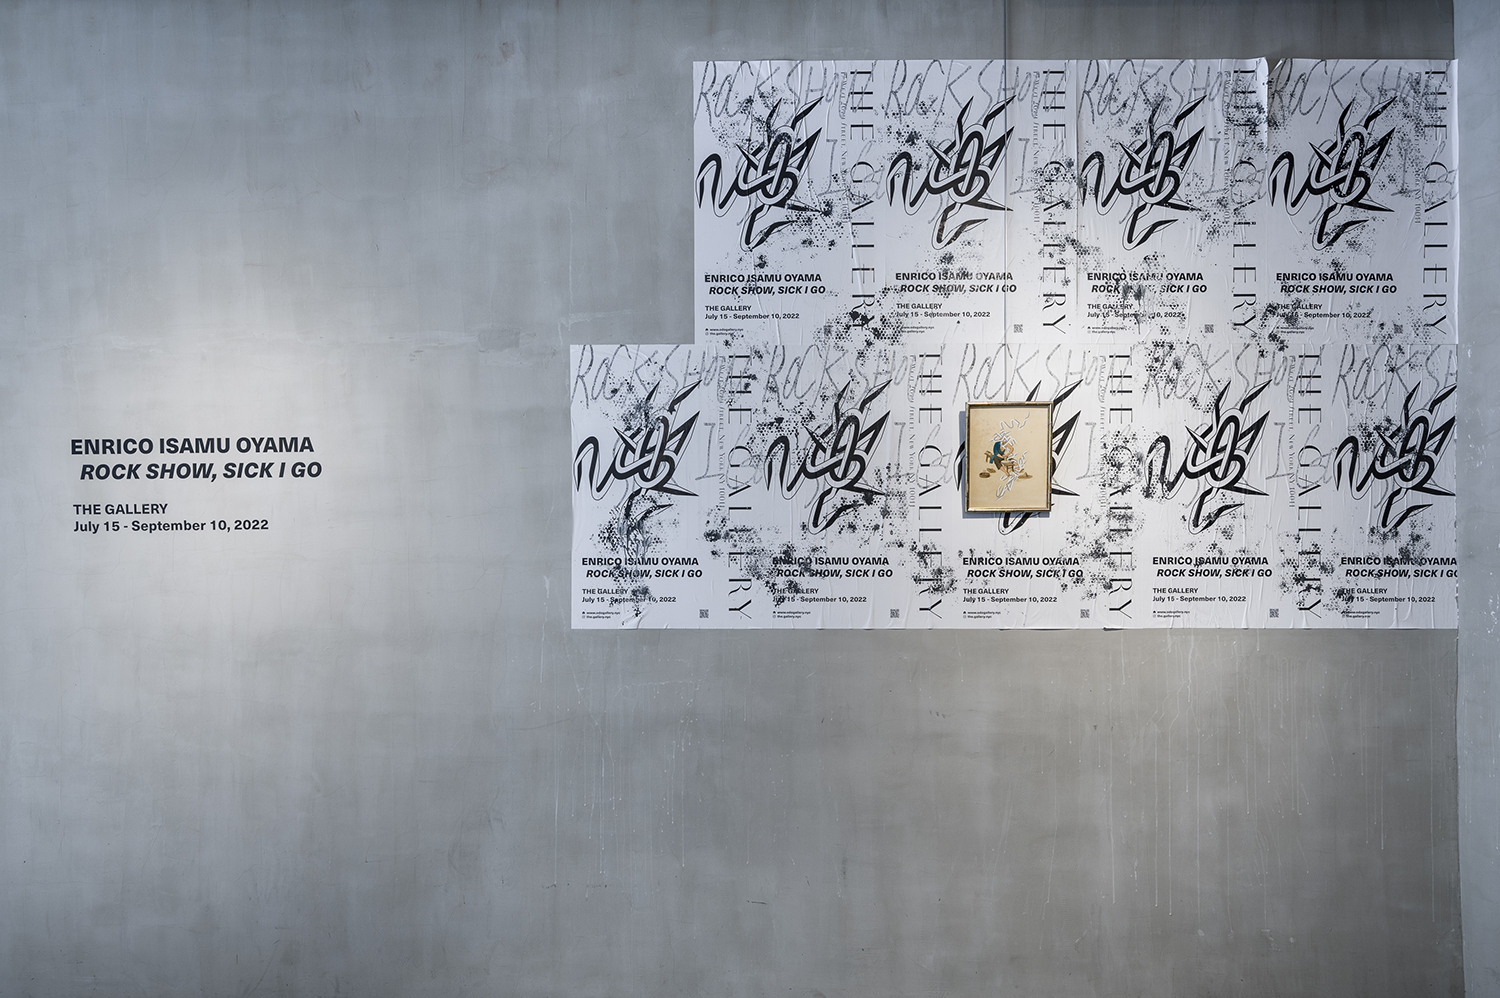 Enrico Isamu Oyama, "Rock Show, Sick I Go" installation view at THE GALLERY, ©Enrico Isamu Oyama, Photo by GION